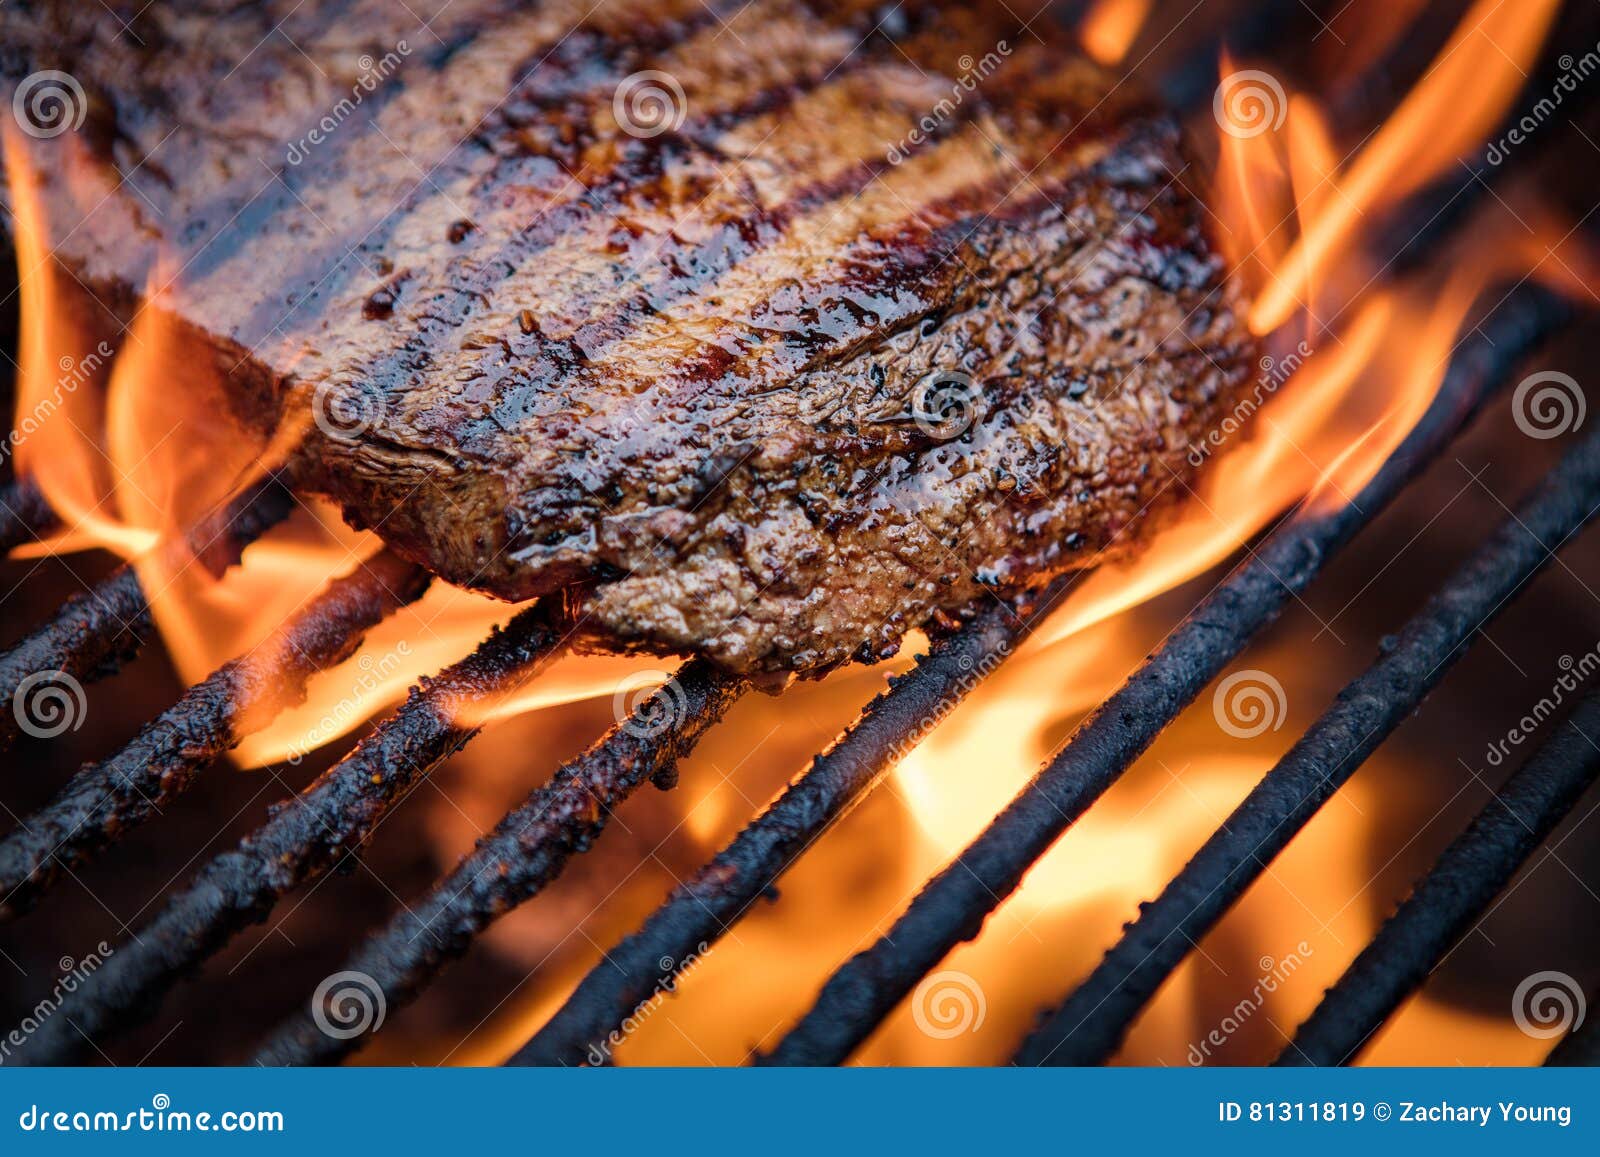 flank steak on grill